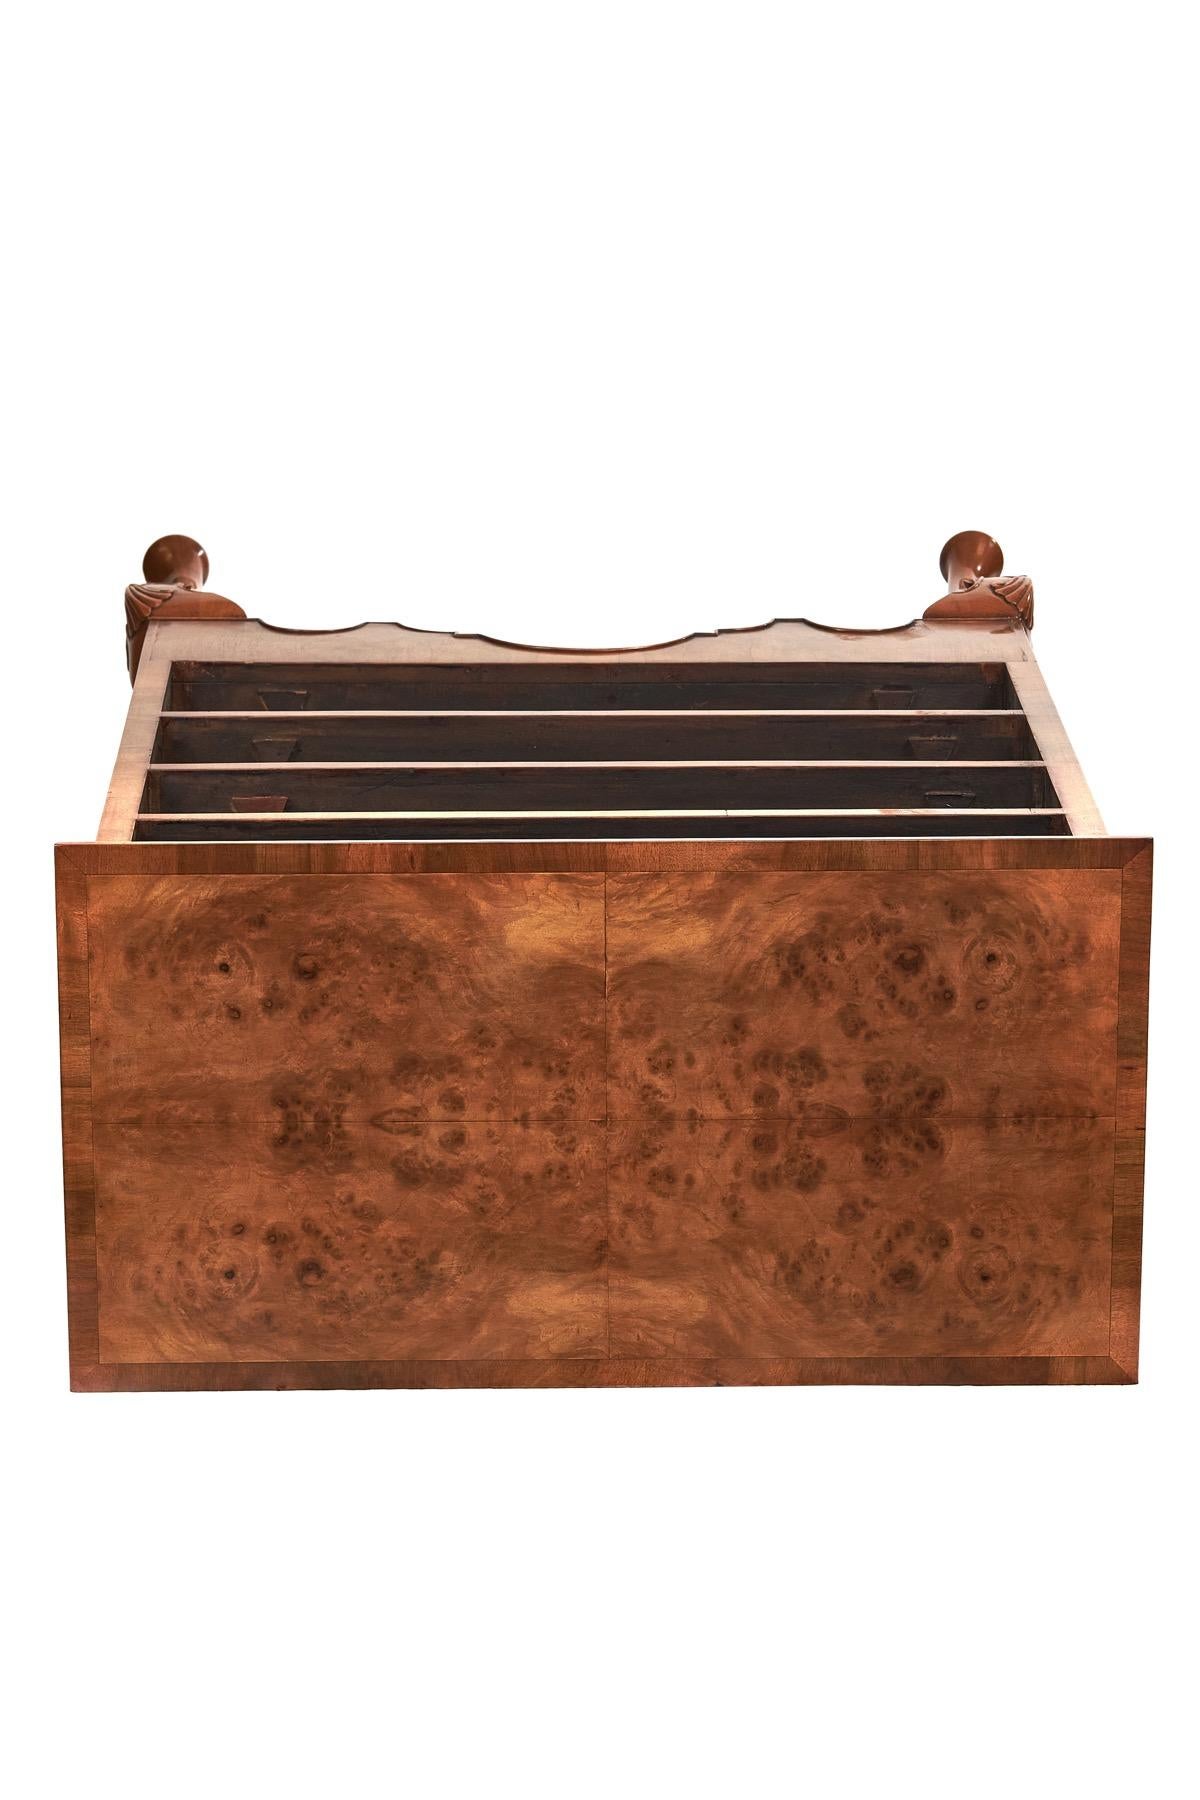 Fine Burr Walnut Georgian  Revival 4 drawer chest circa 1920s For Sale 1